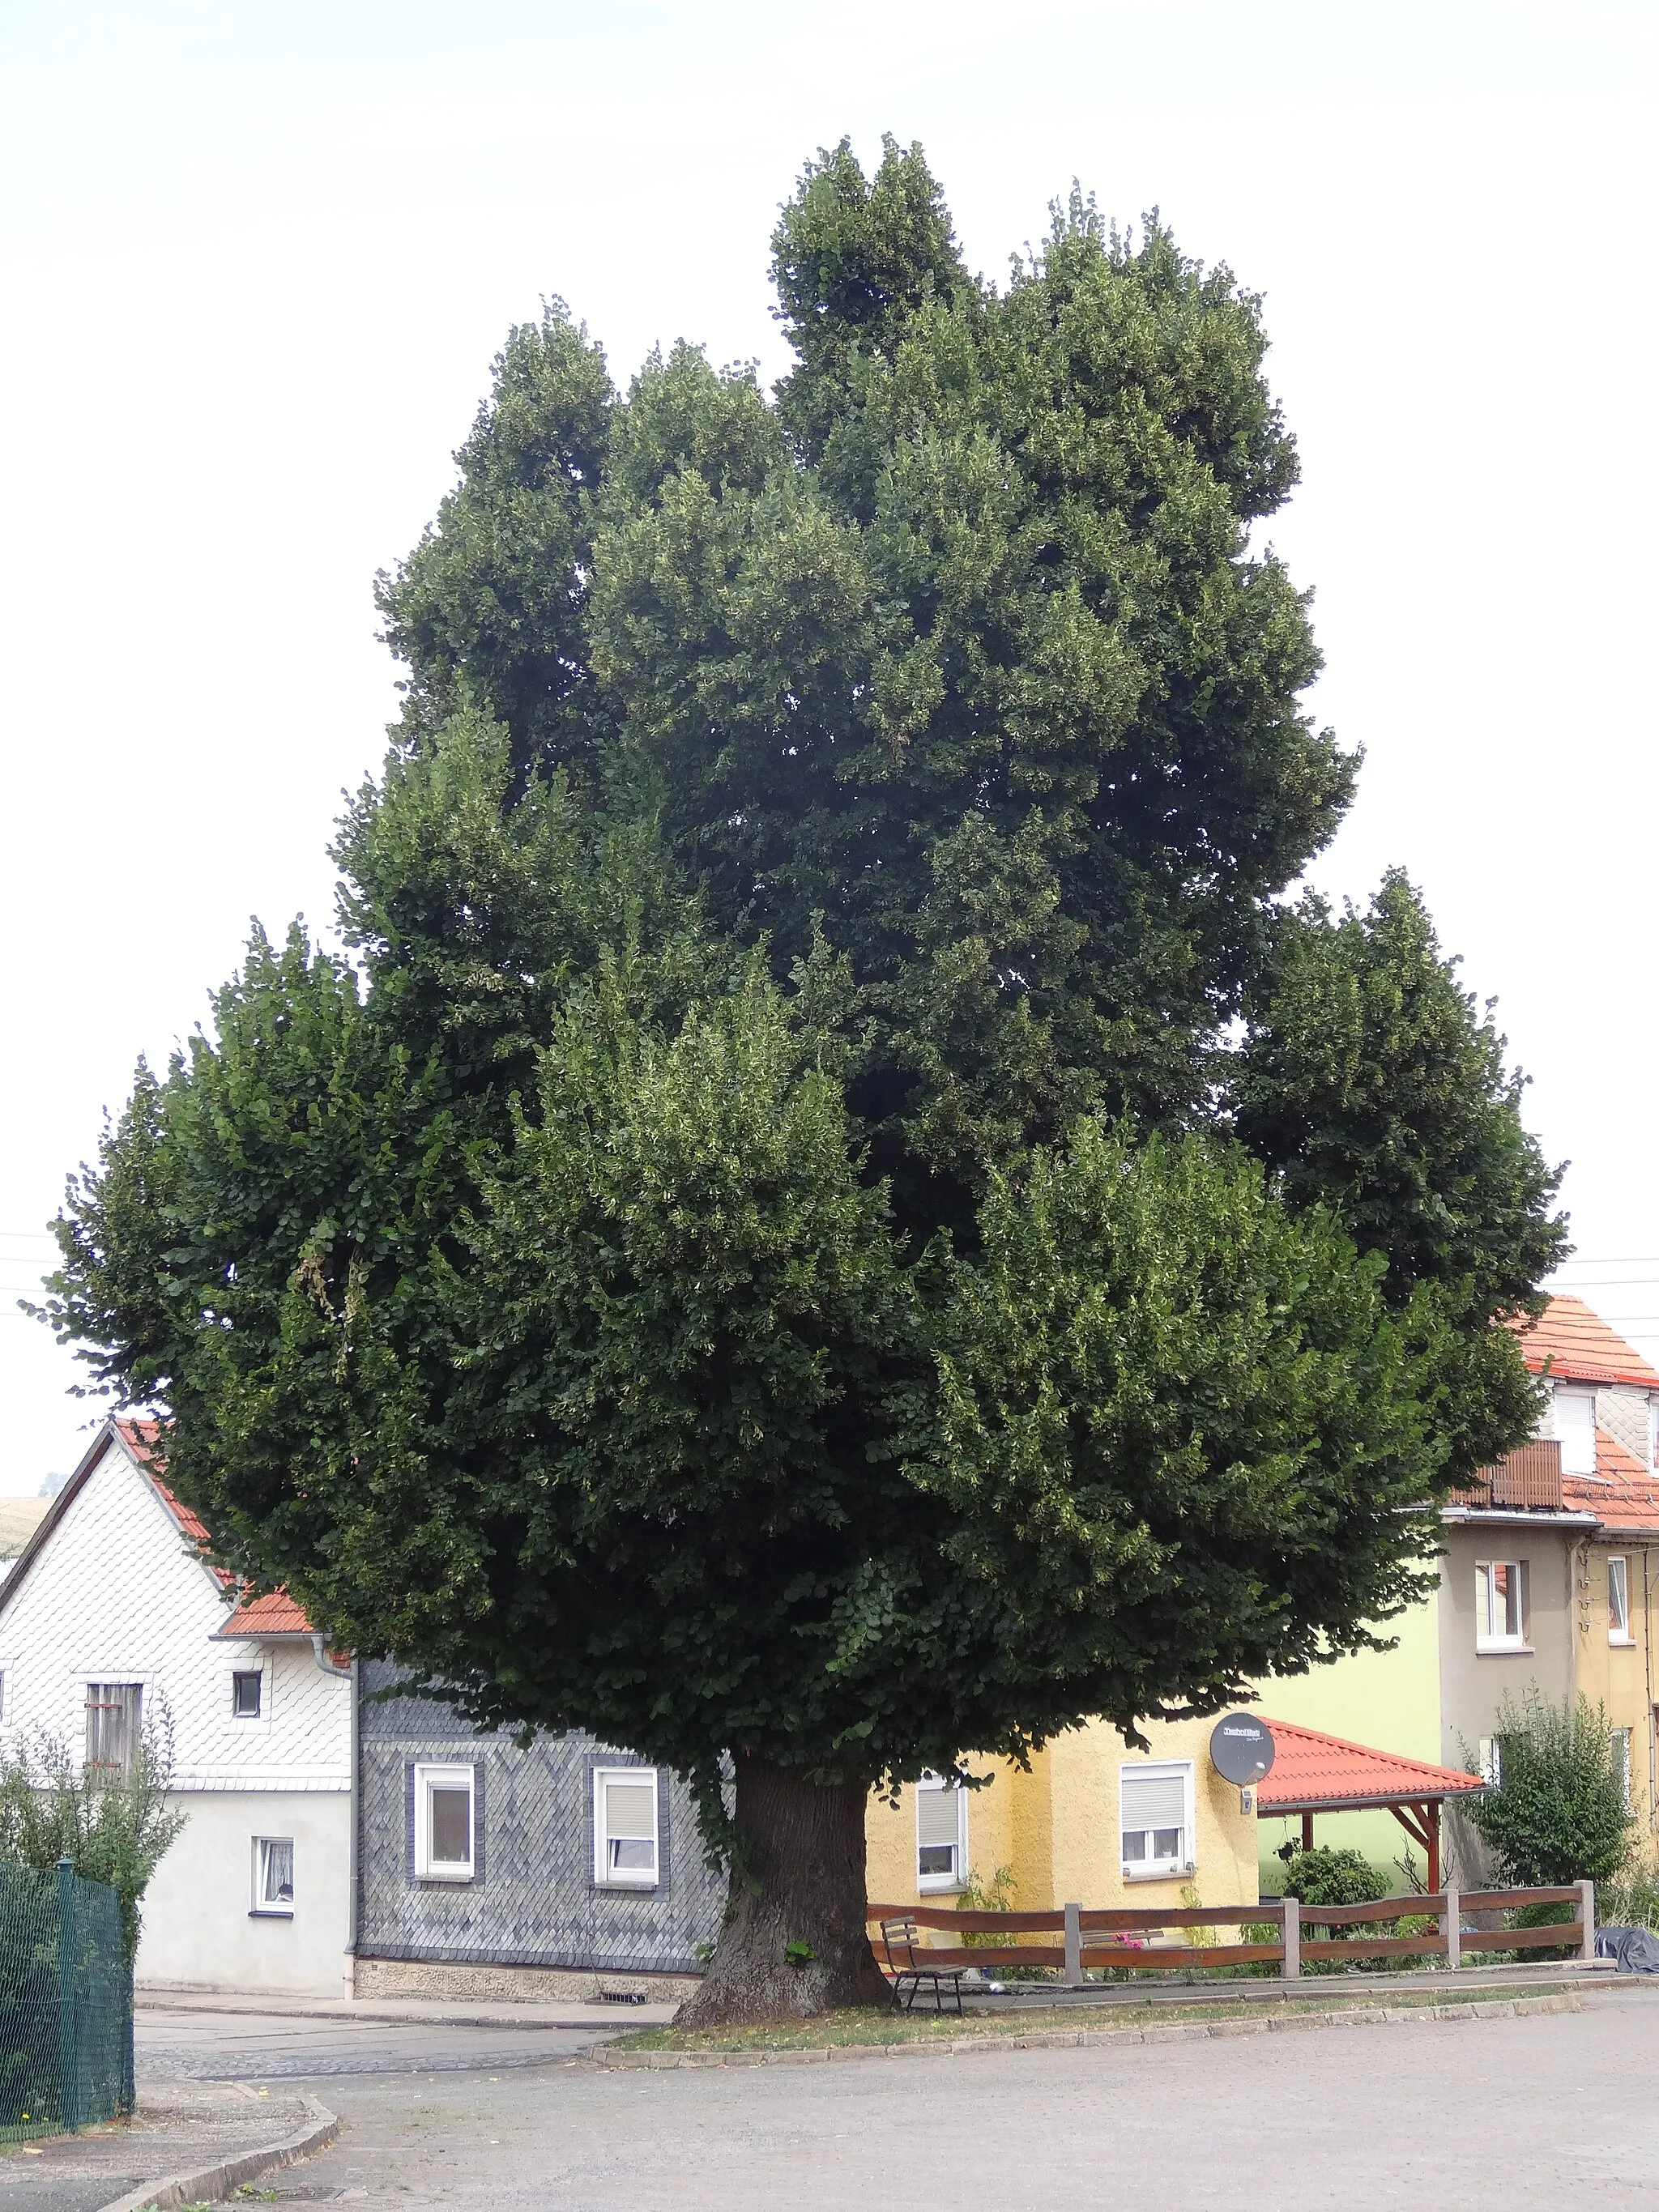 Photo showing: Baum in Aschau (Allendorf), Thuringia, Germany